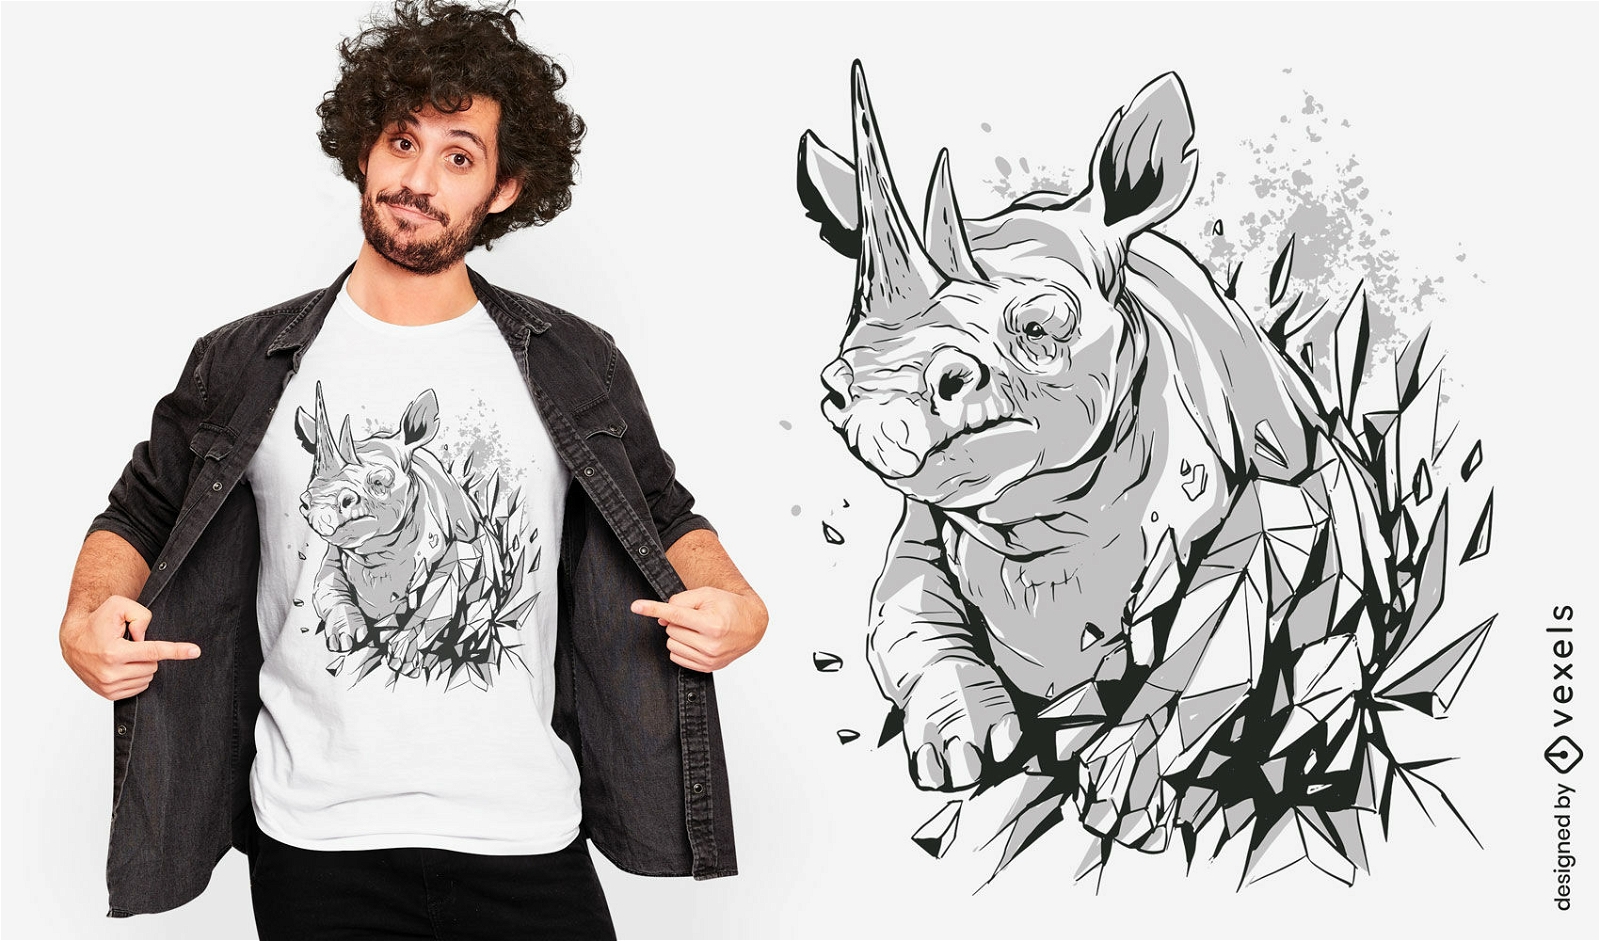 Dise?o de camiseta de rinoceronte poligonal.